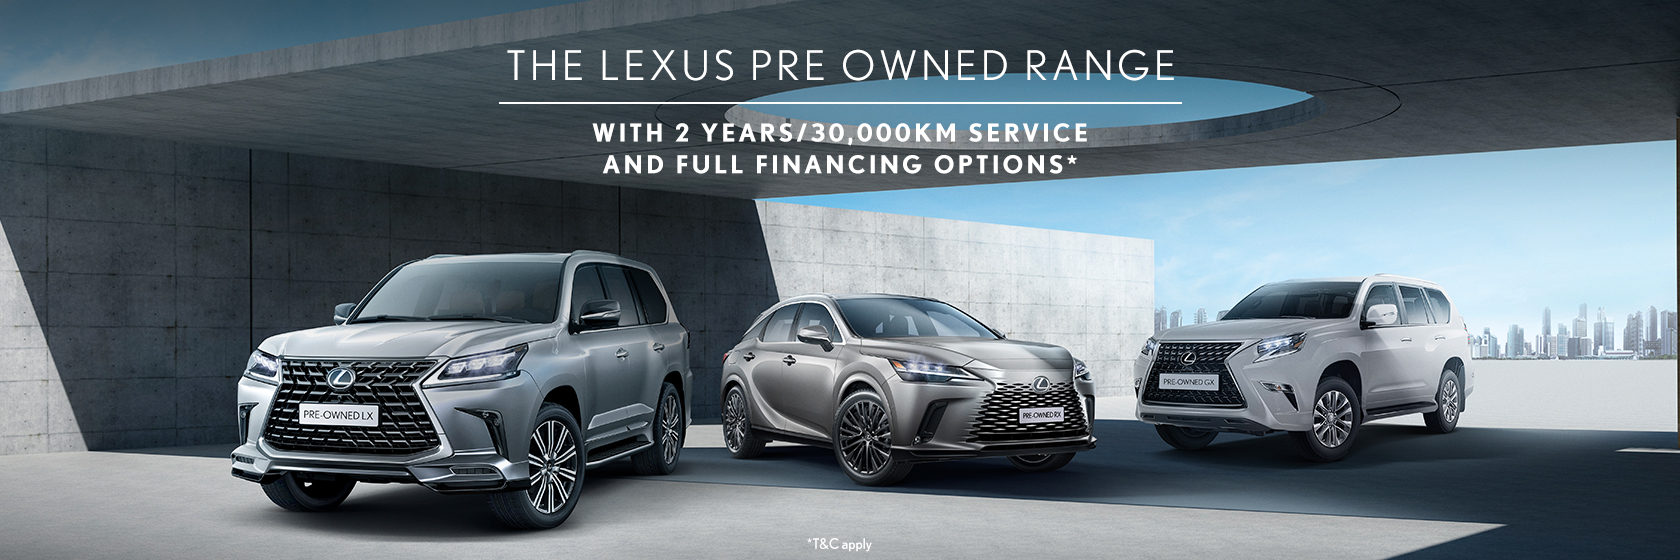 lexus-pre-owned-offer-general